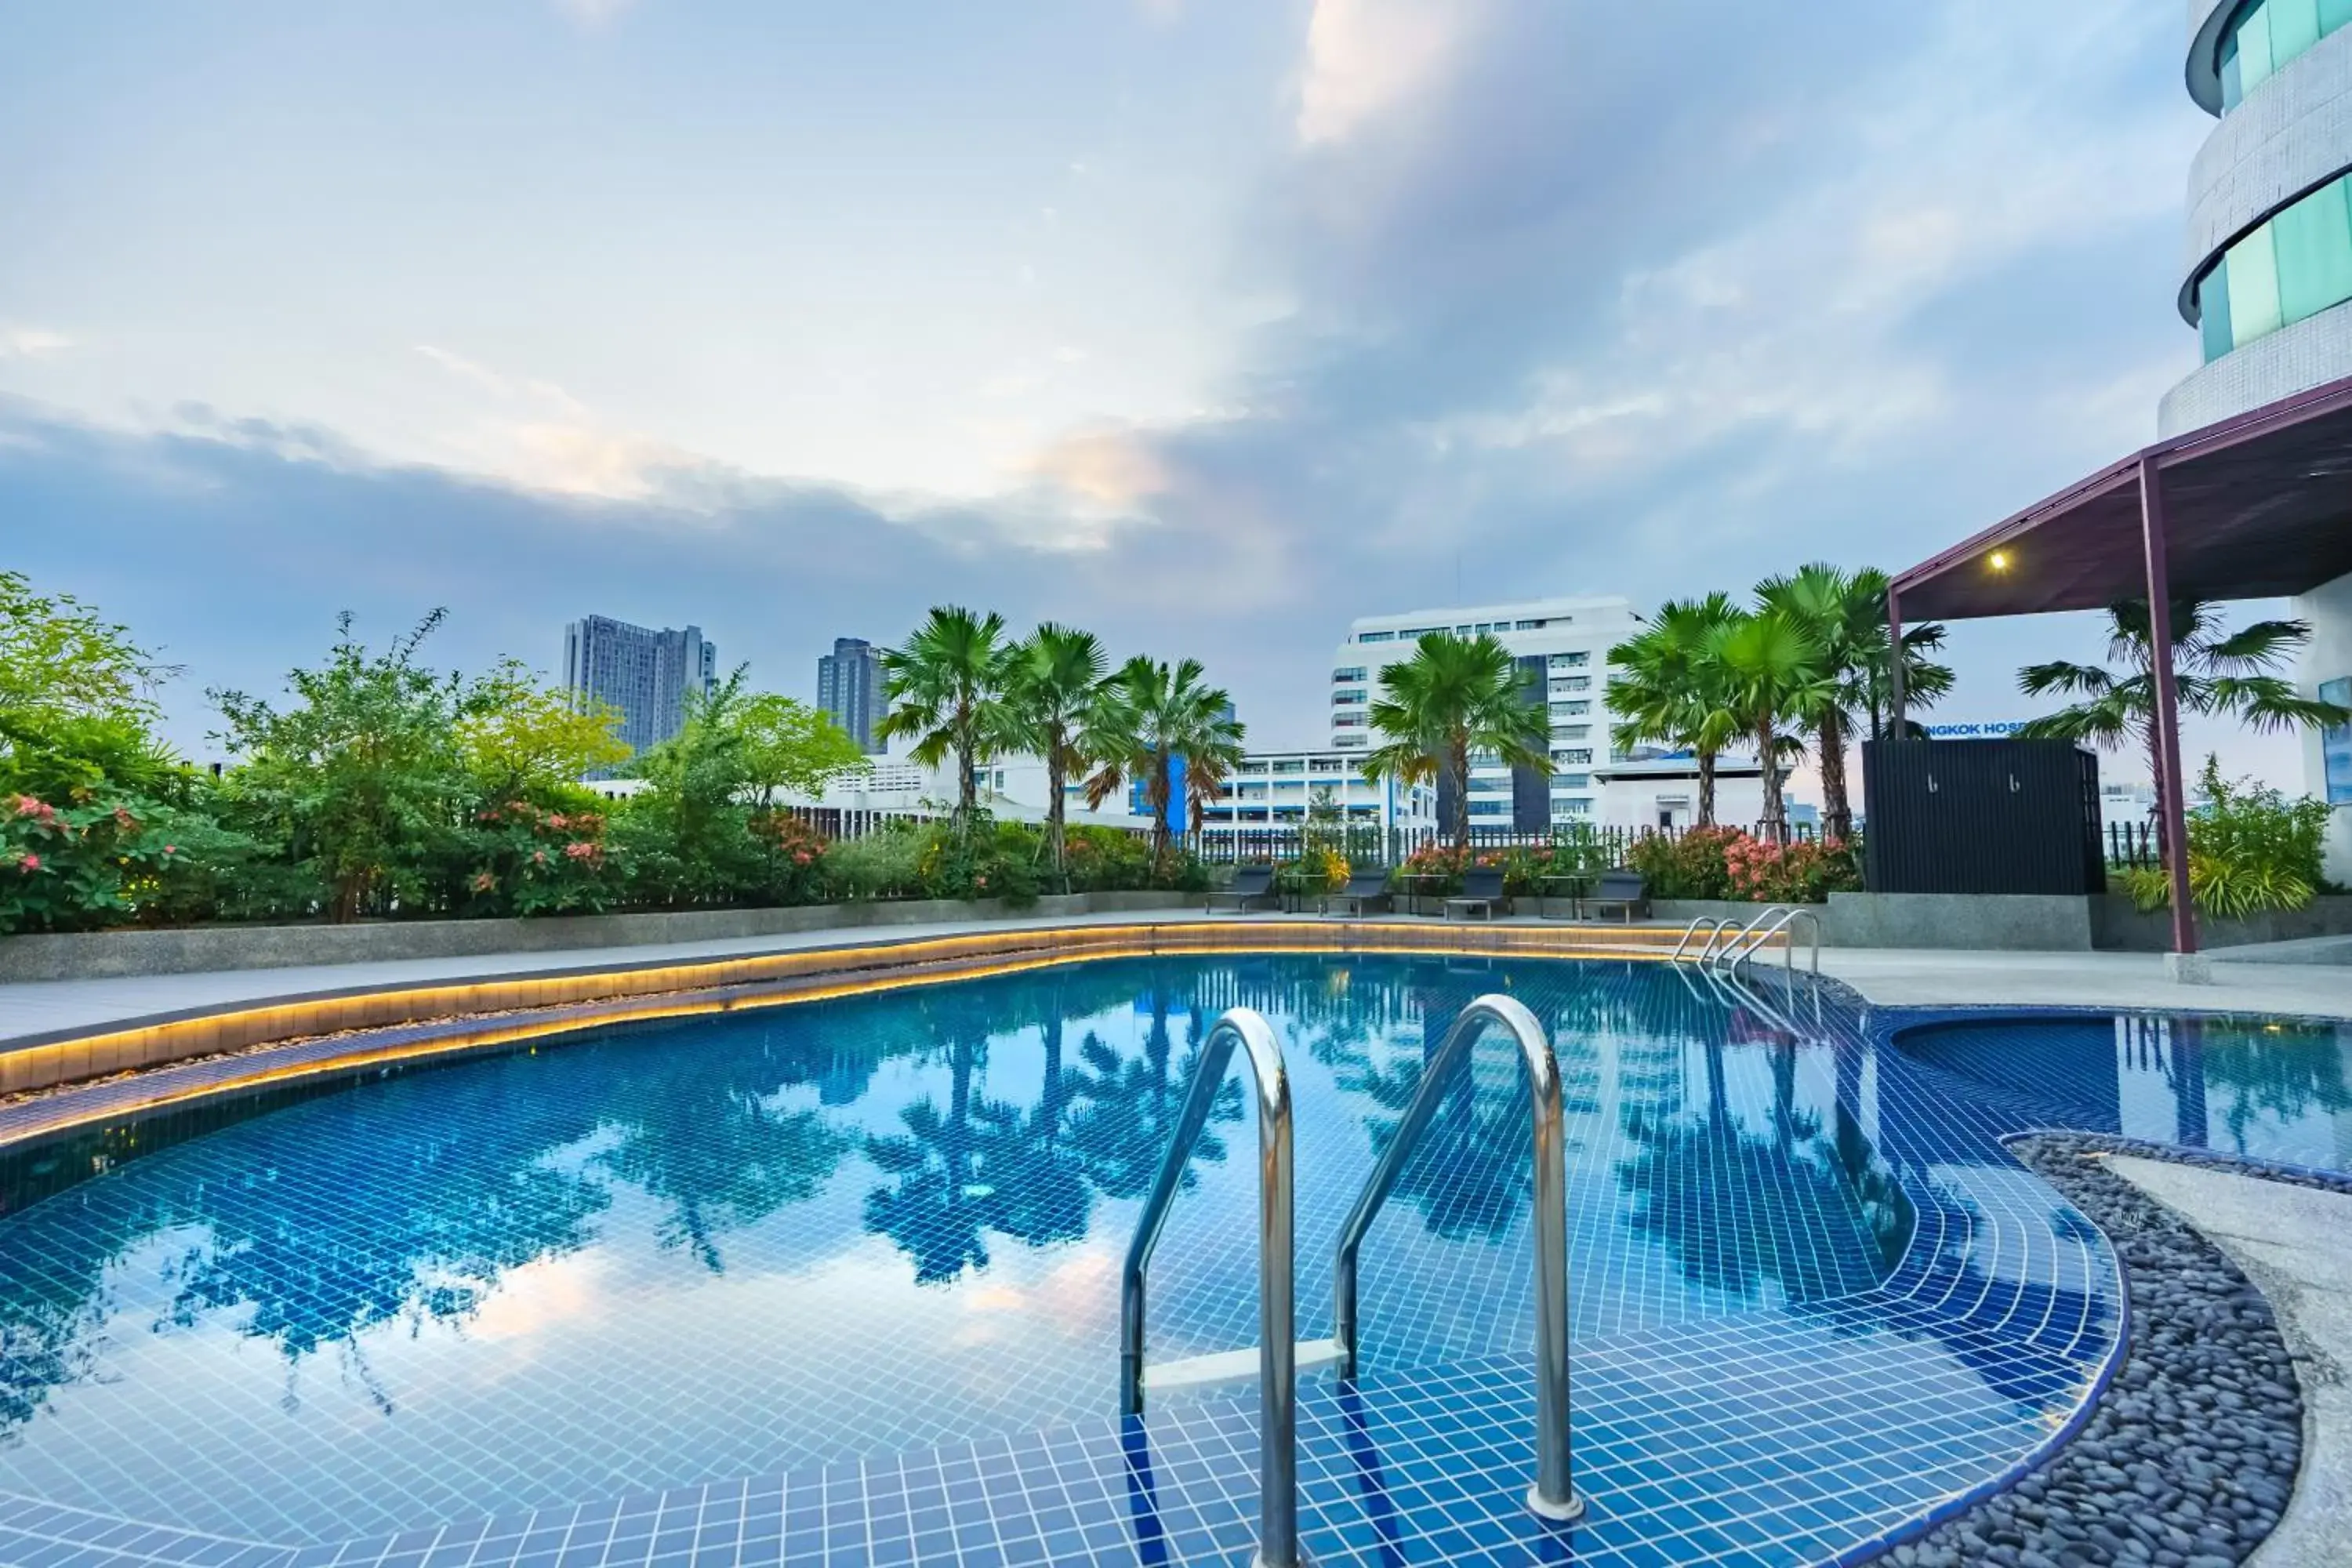 Swimming Pool in A-One Bangkok Hotel